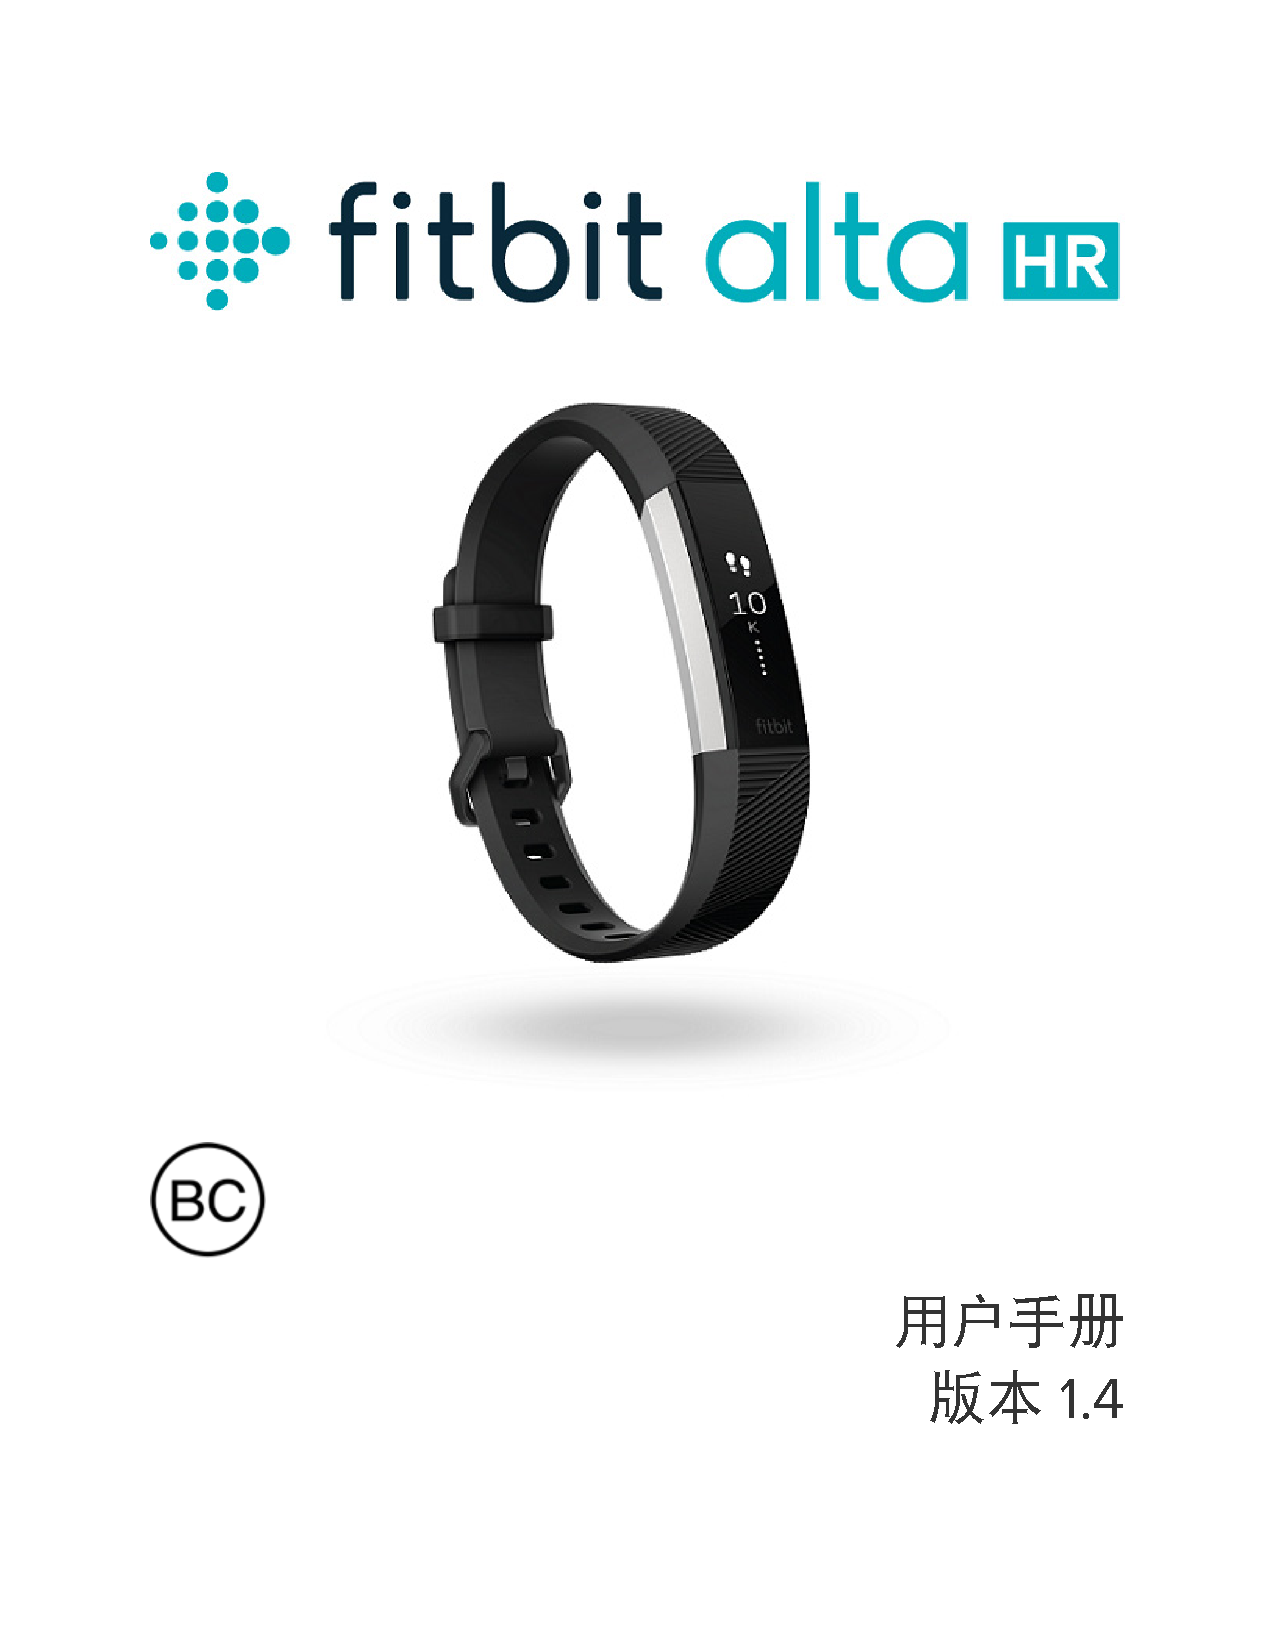 Fitbit Alta HR 用户手册 封面